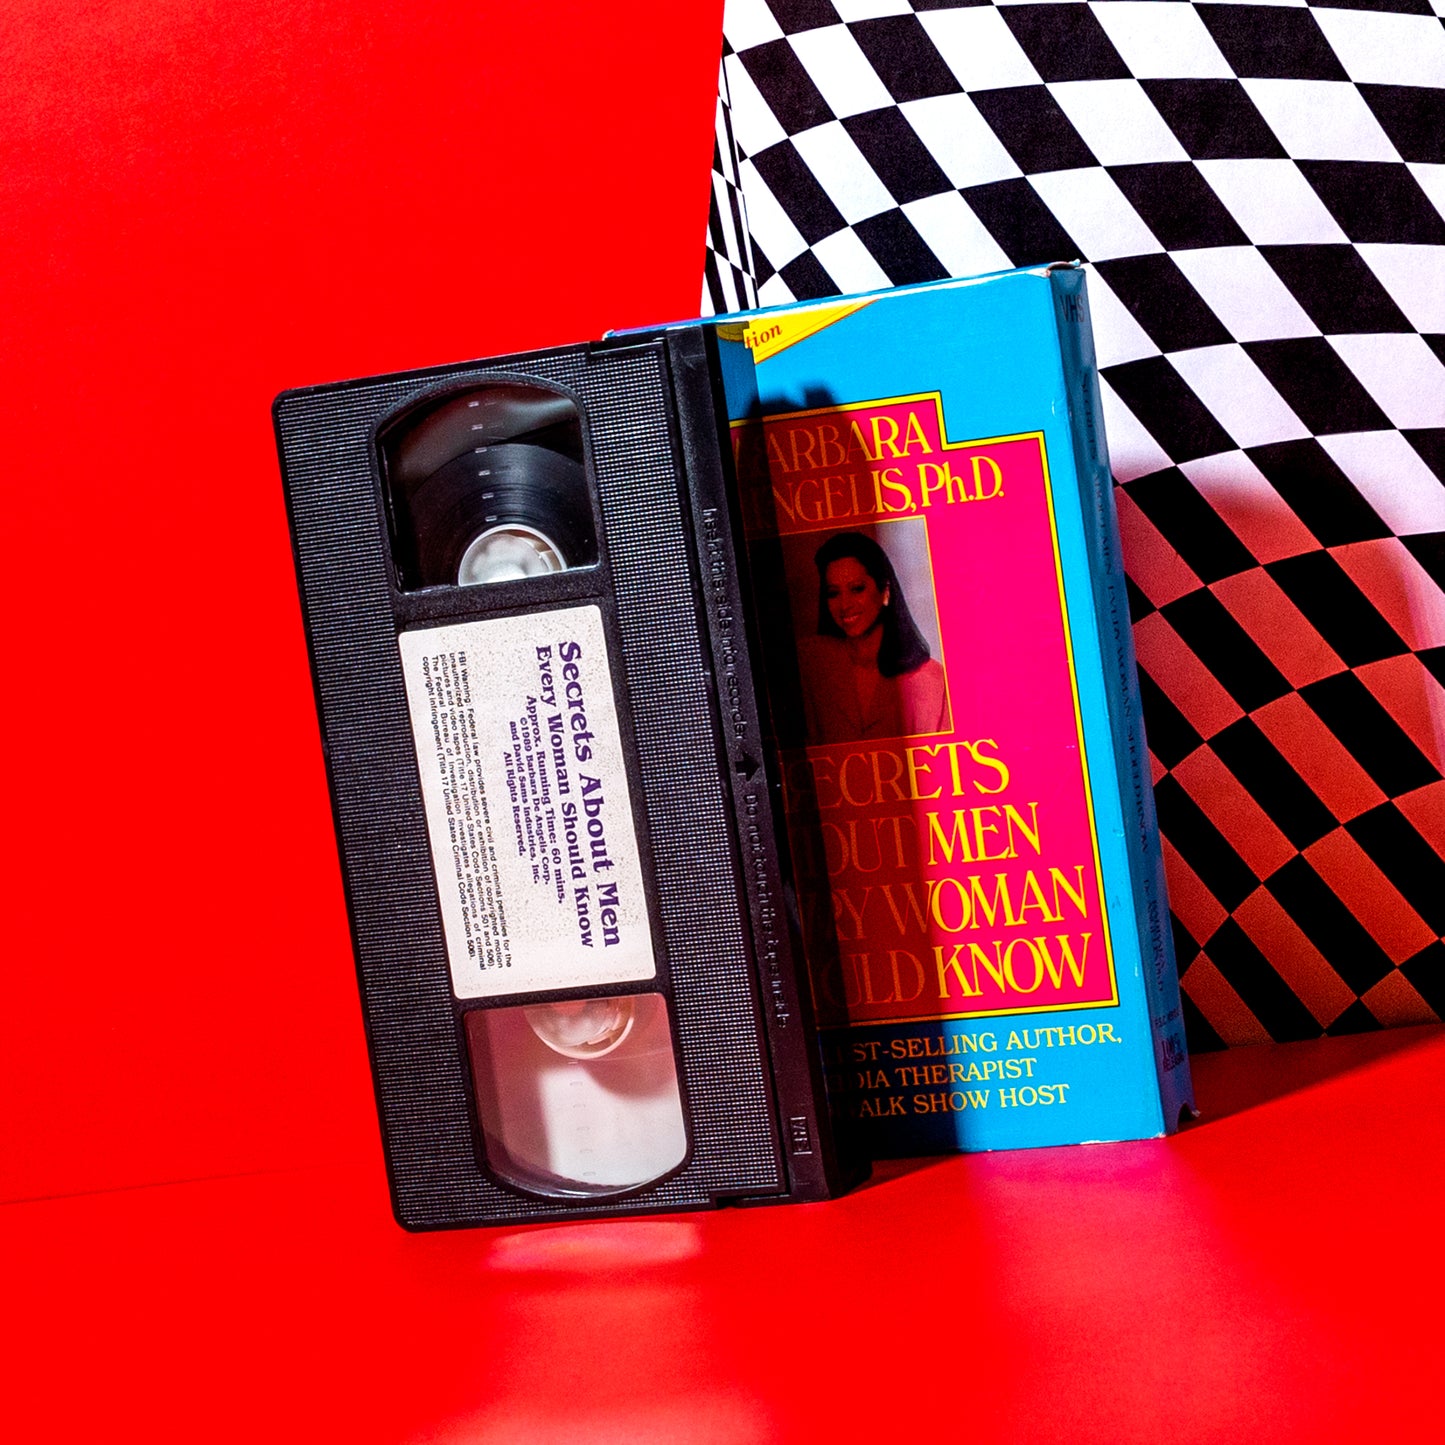 Secrets About Men Every Woman Should Know, 1989 (VHS)